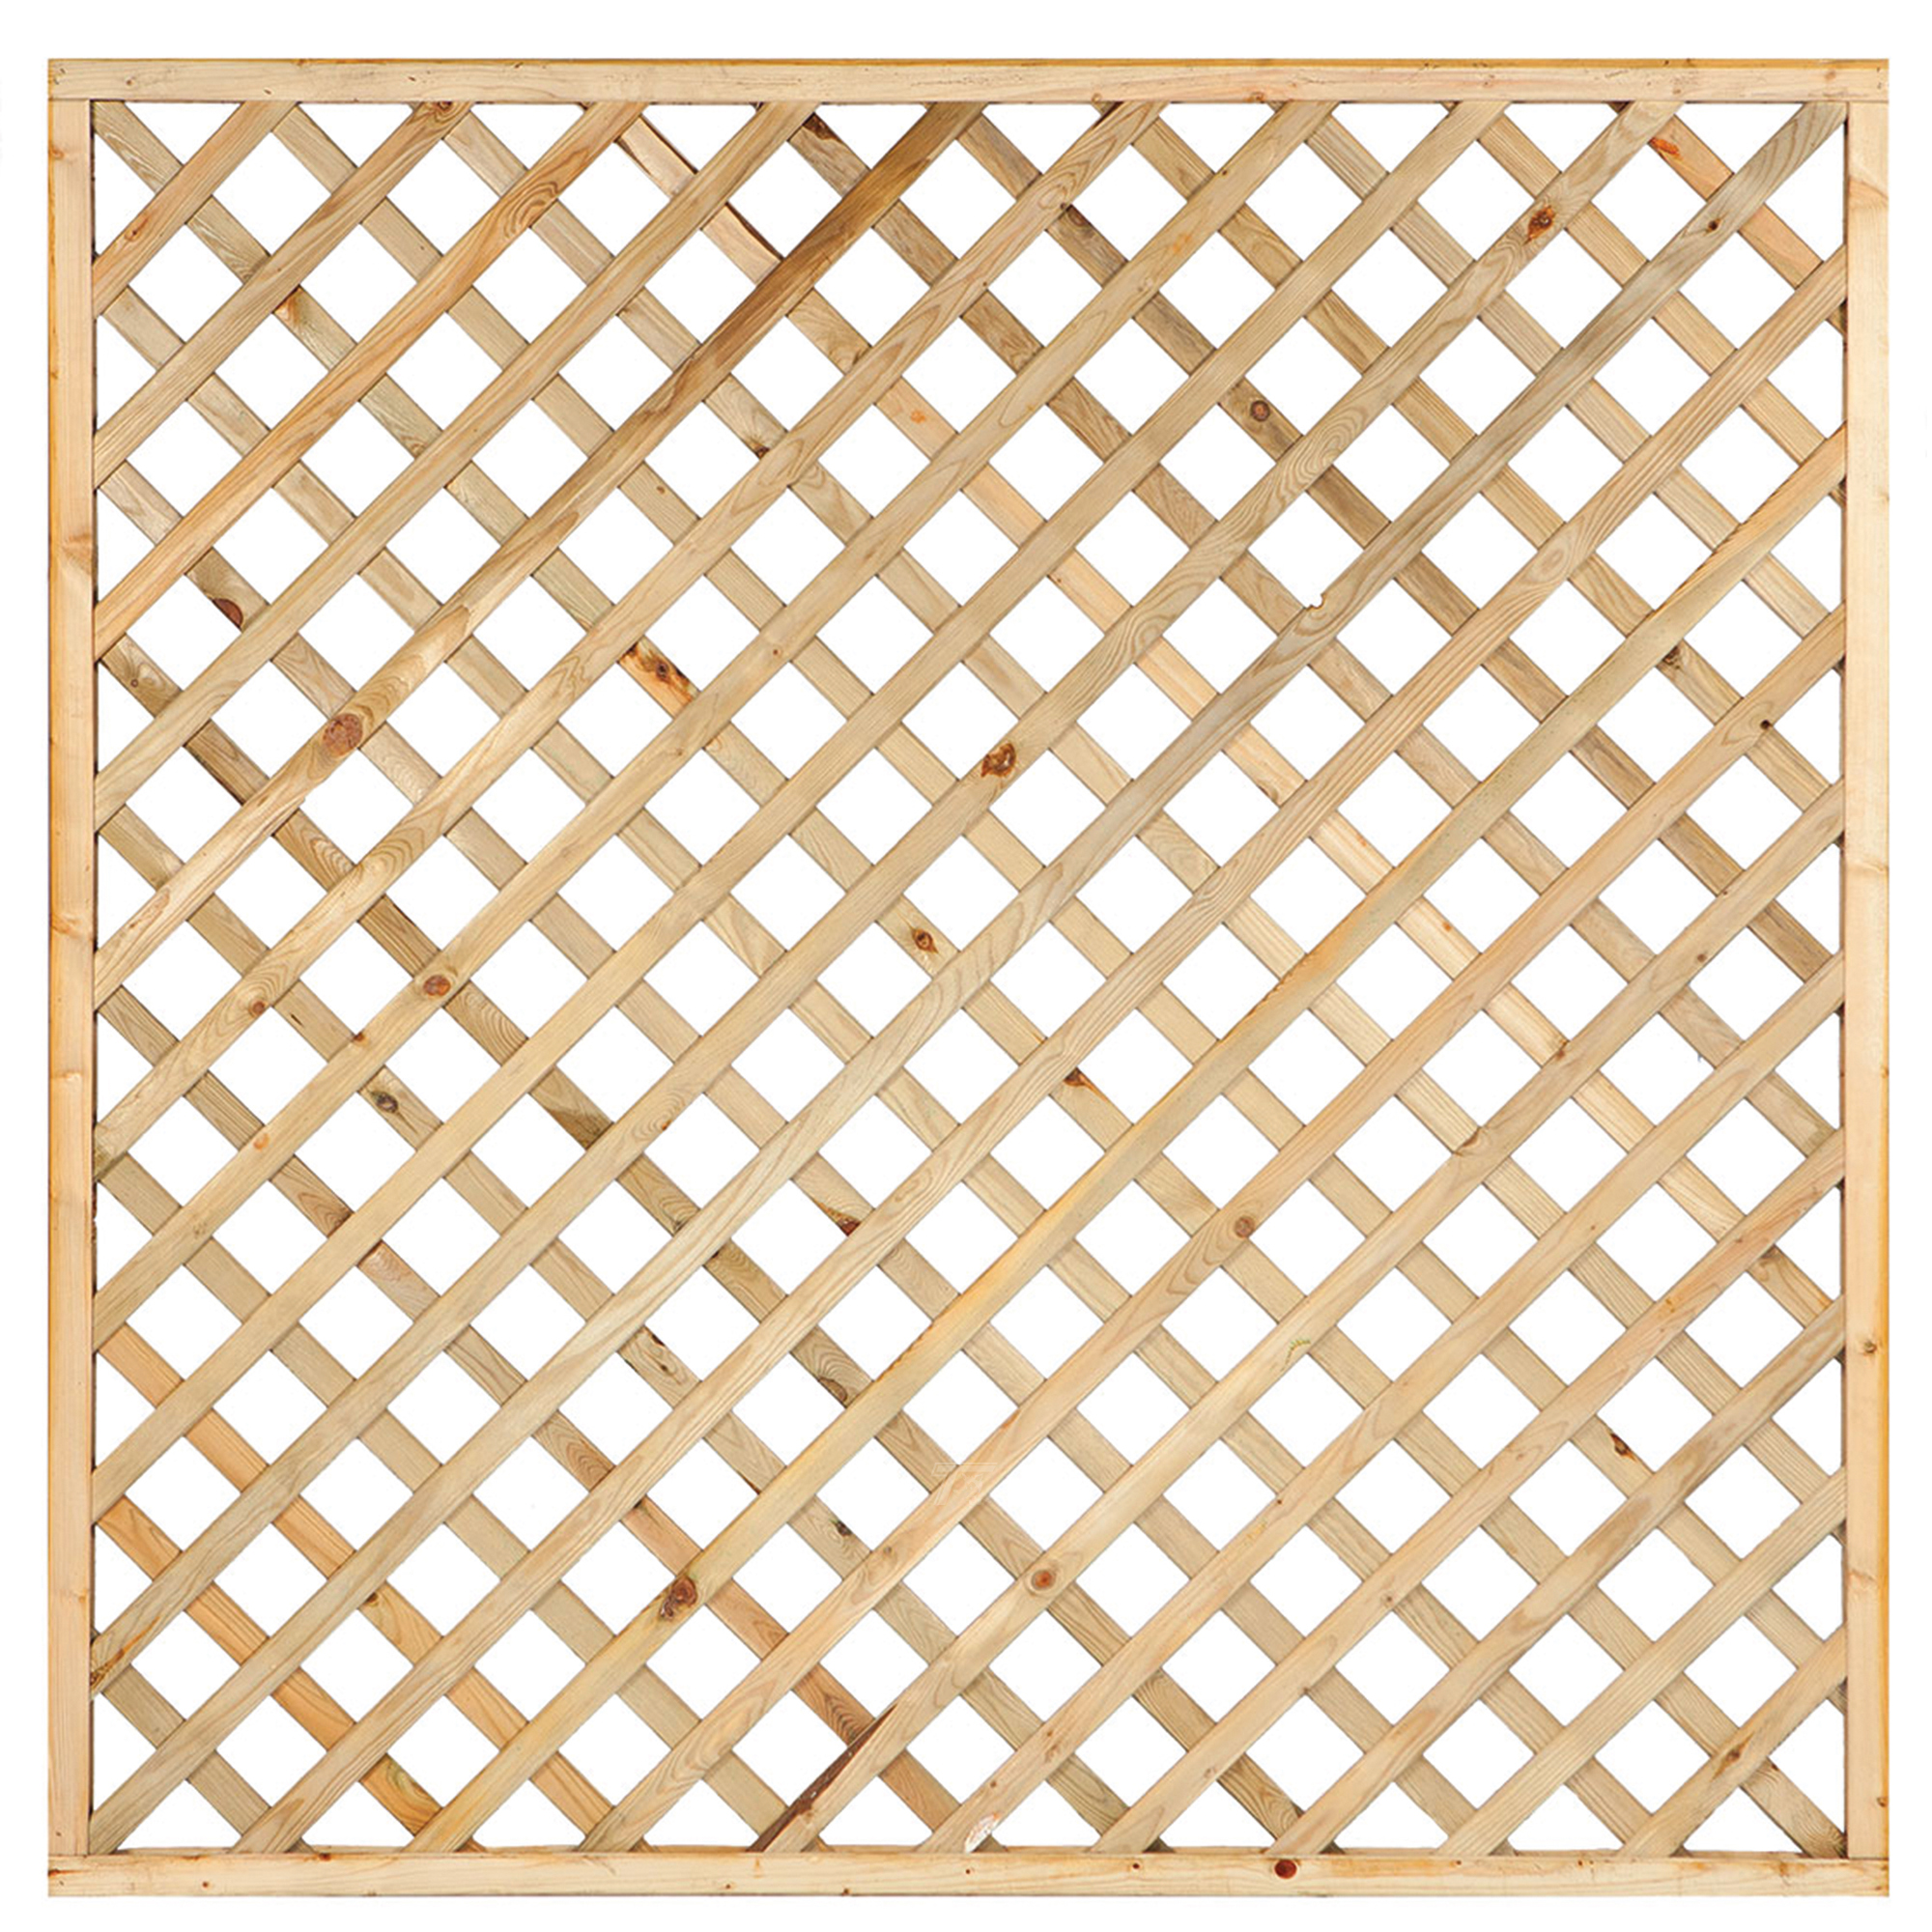 Spalier diagonal mit geradem Rahmen, 180 cm